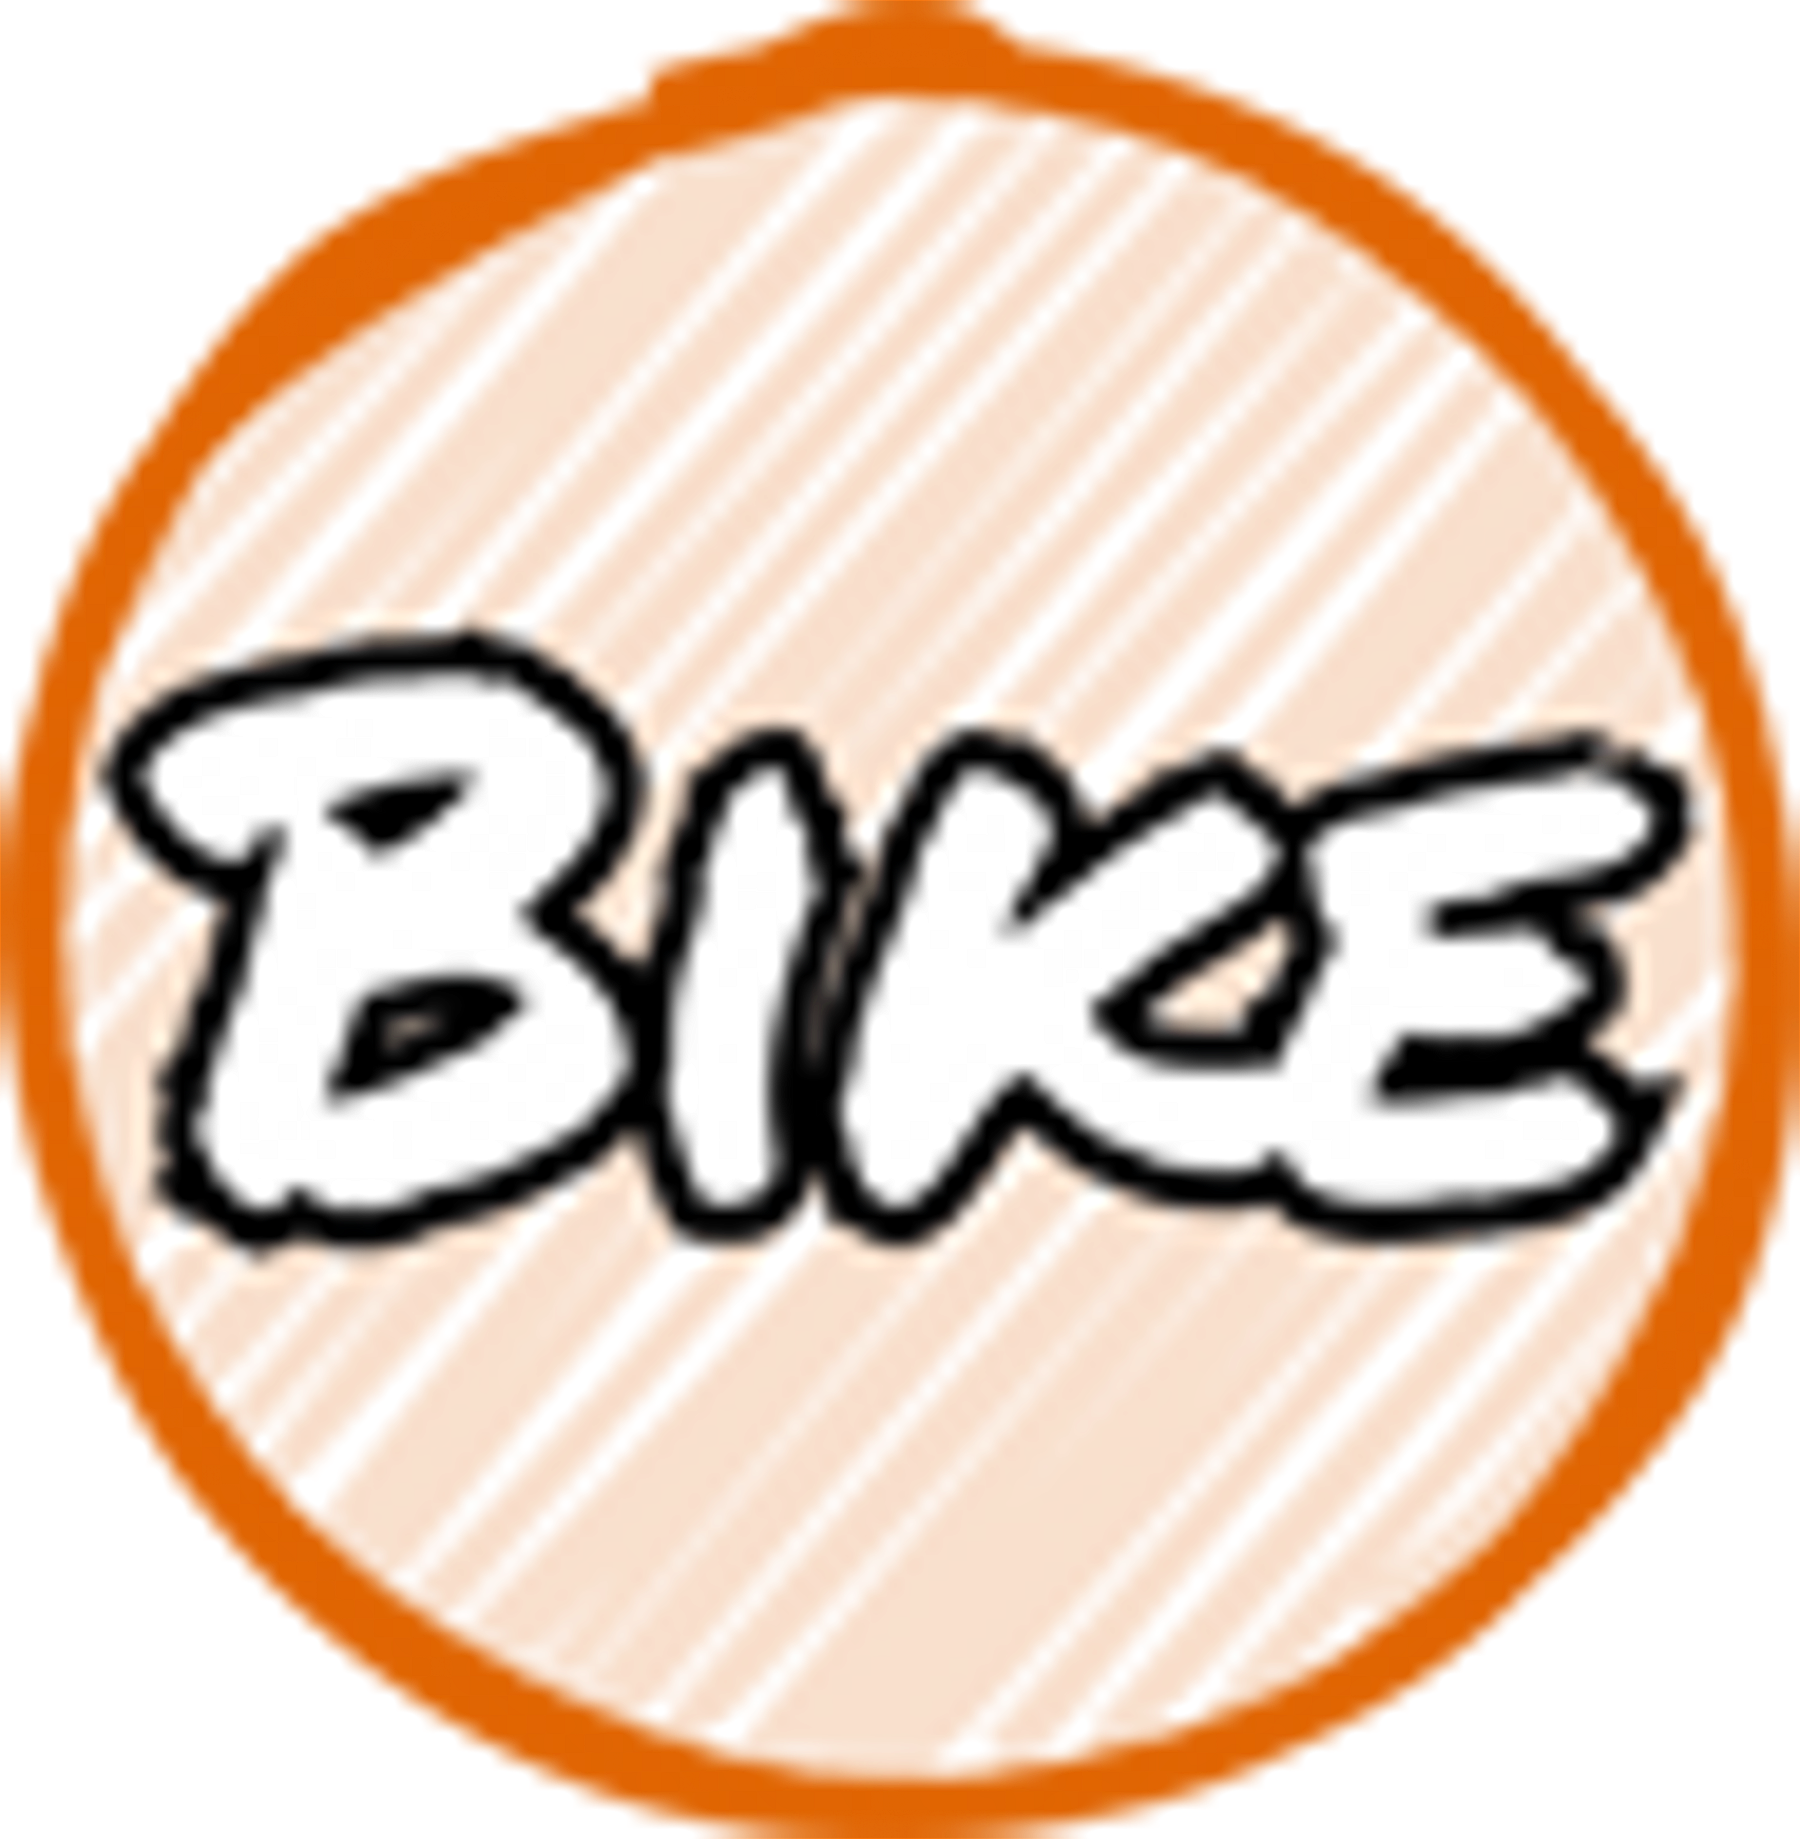 Bike | Blog by John Guerra